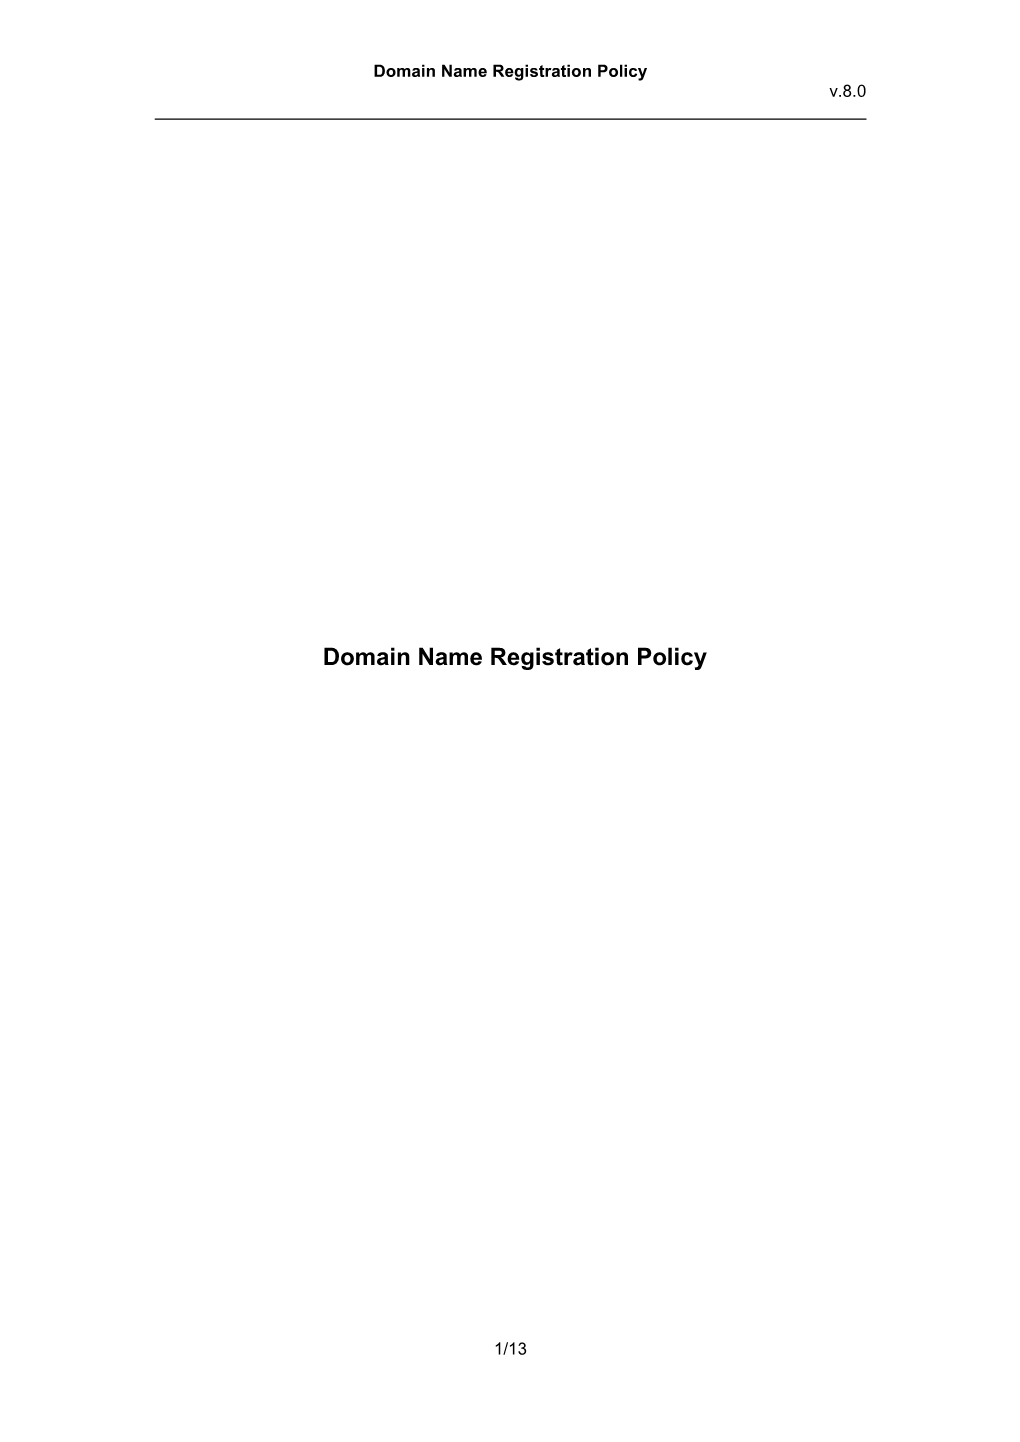 Domain Name Registration Policy V.8.0